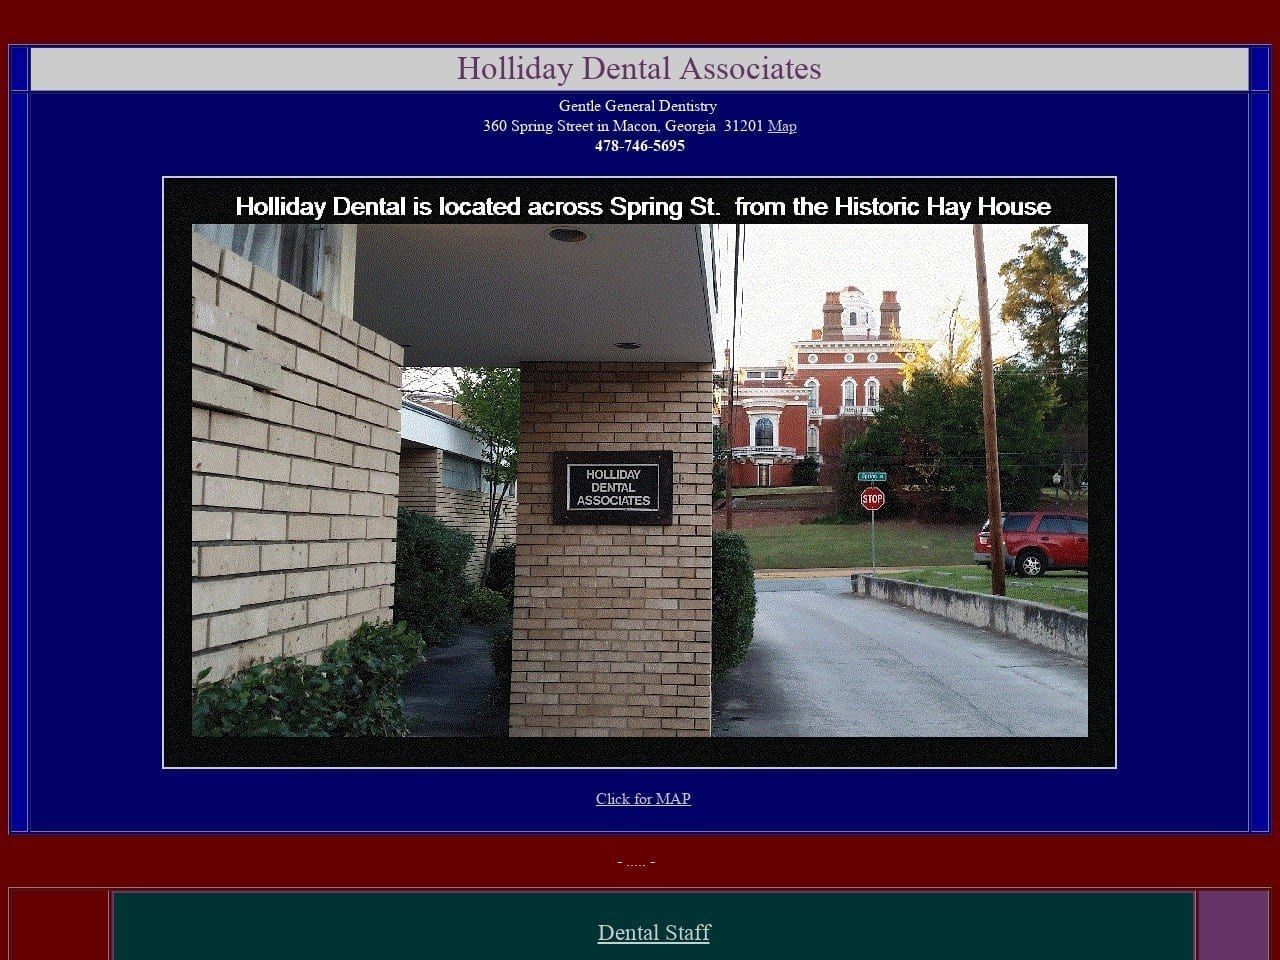 Holliday Dental Assoc Website Screenshot from hollidaydental.com